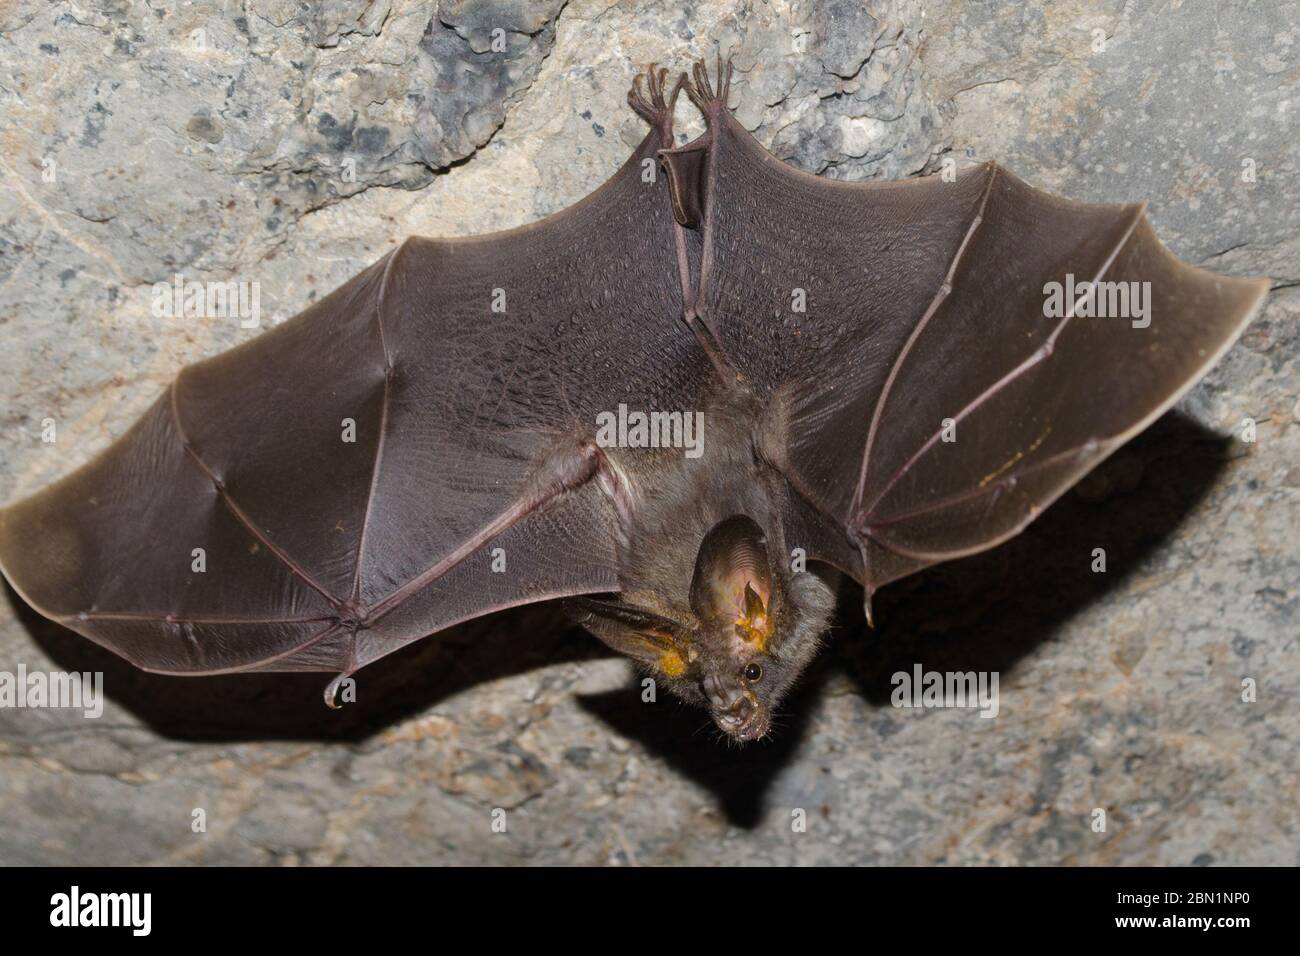 Lesser false vampire bat hi-res stock photography and images - Alamy